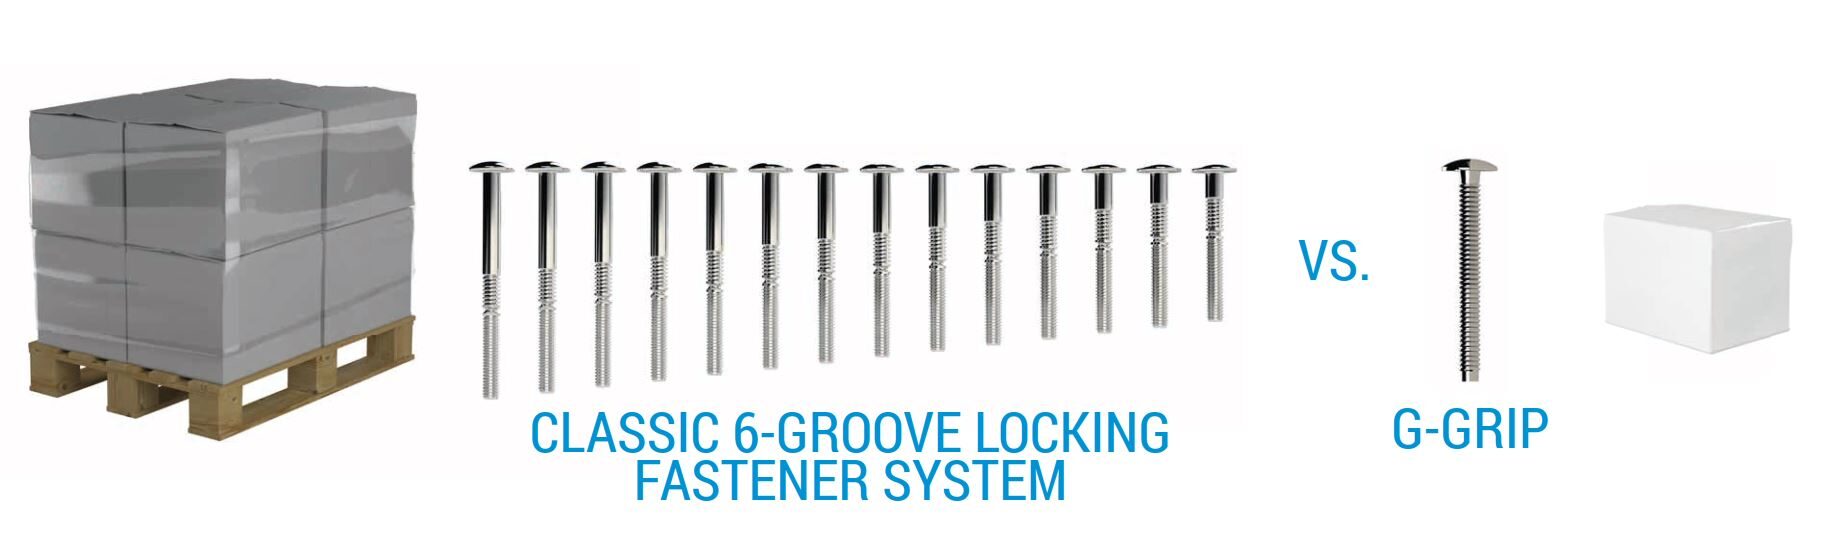 classic 6 groove lockbolt collar fastener system vs g-grip lockbolt collar illustration